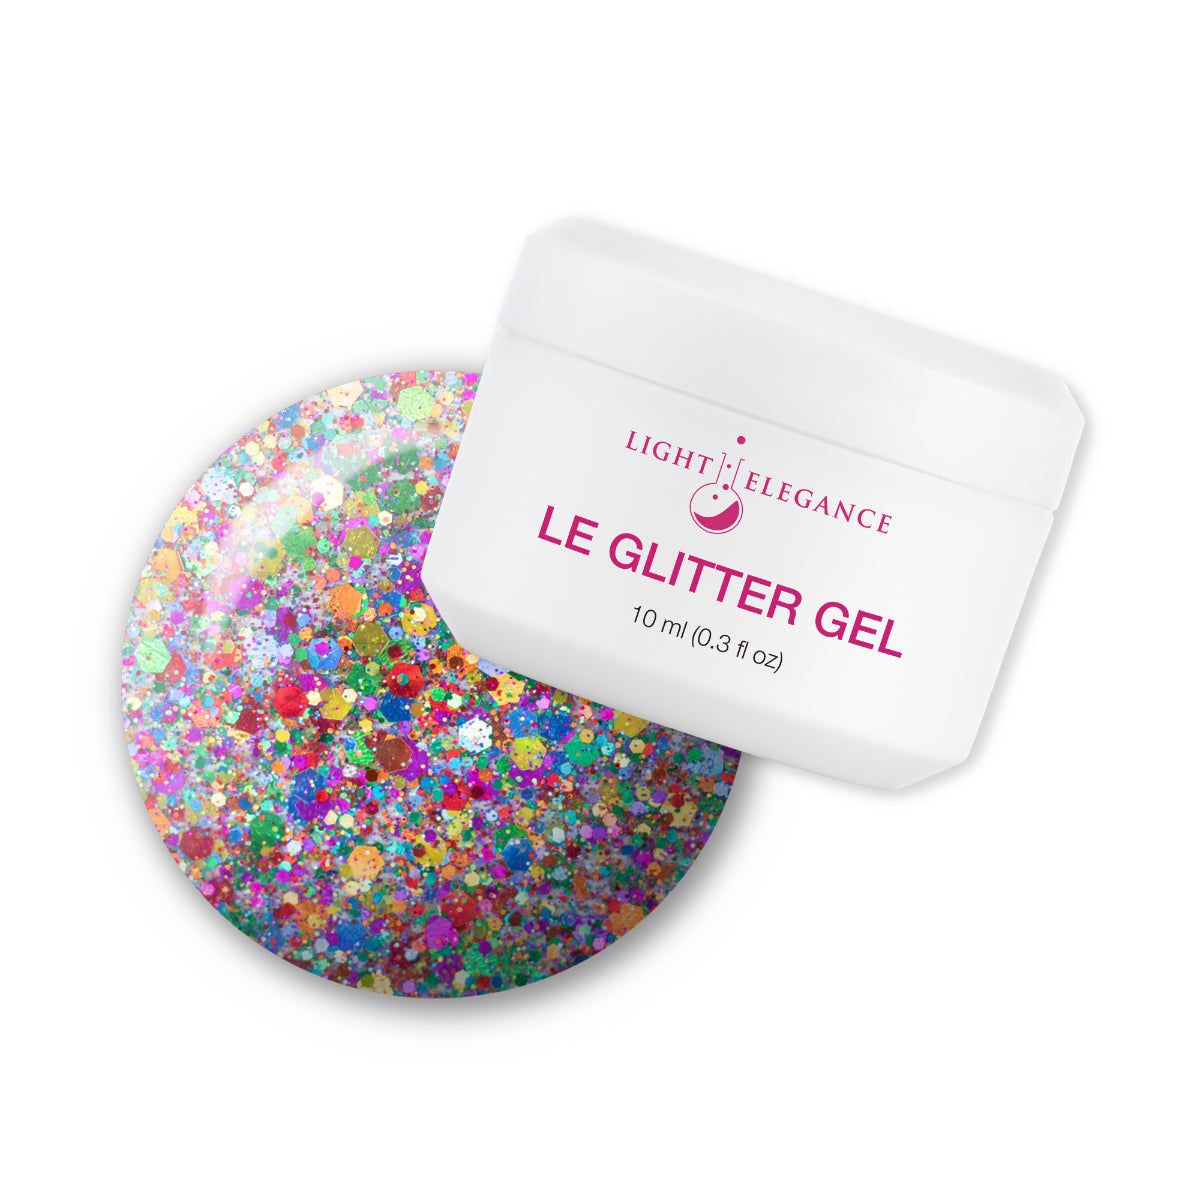 Light Elegance Glitter Gel - Everyone's a Critic :: New Packaging